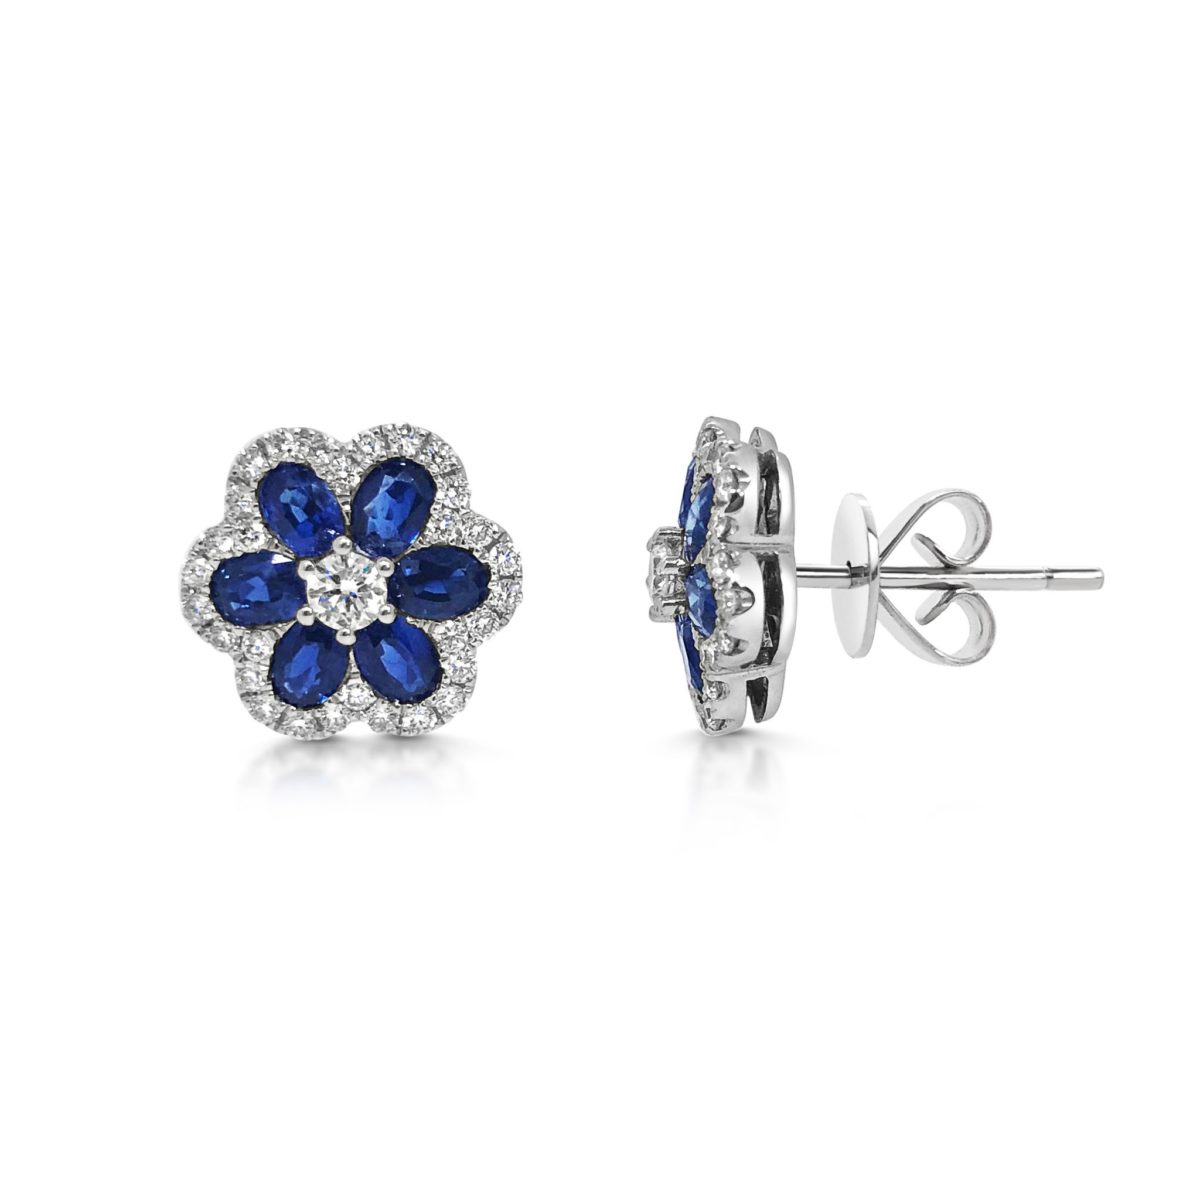 Mia Oval Cut Blue Sapphire and Diamond Cluster Earrings